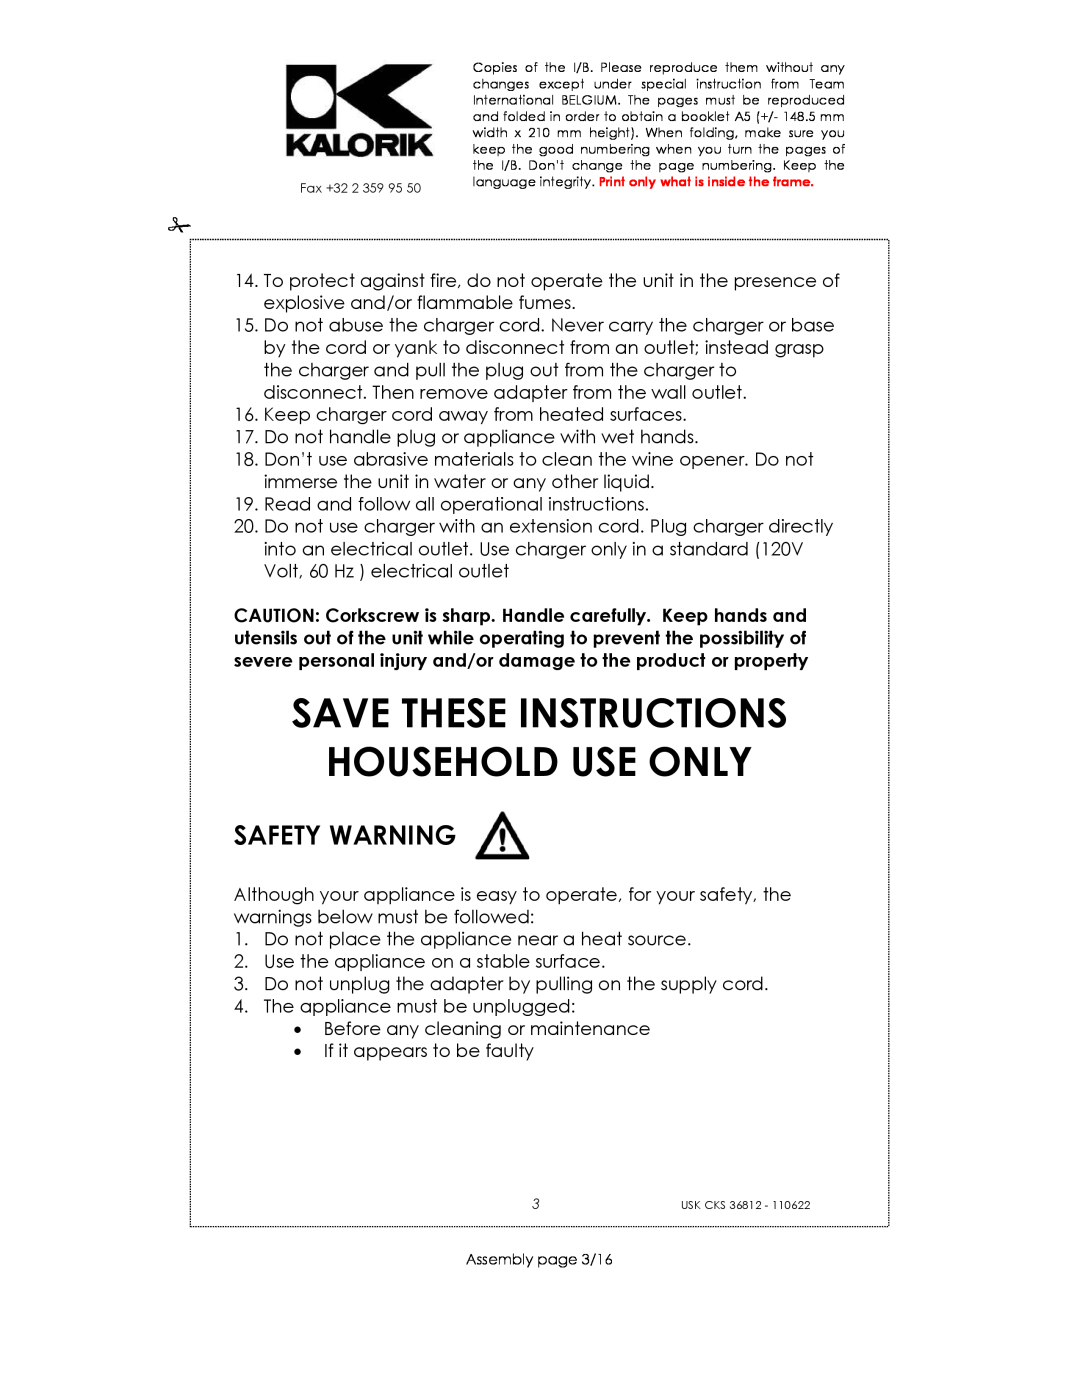 Kalorik USK CKS 36812 manual Save These Instructions Household Use Only, Safety Warning 